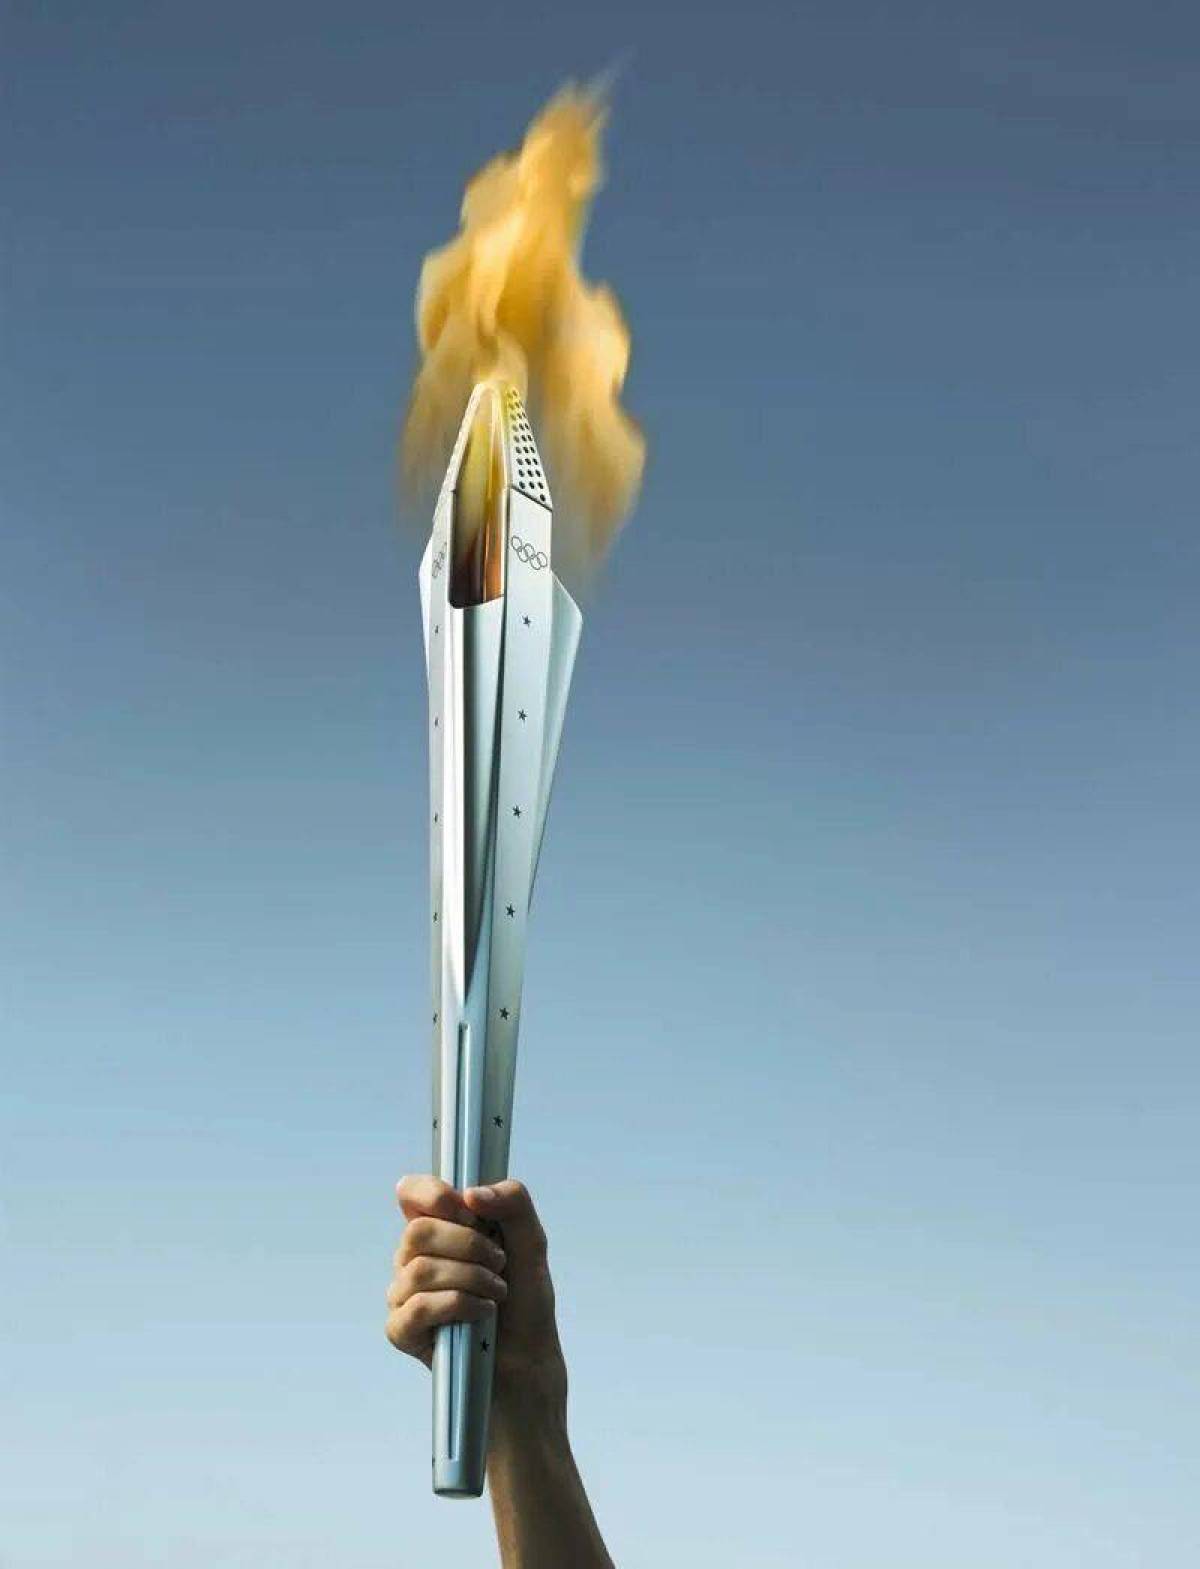 Факел начал игру. Факел Олимпийских игр. Факел олимпийского огня. Олимпийские игры огонь факел. Олимпийское пламя.